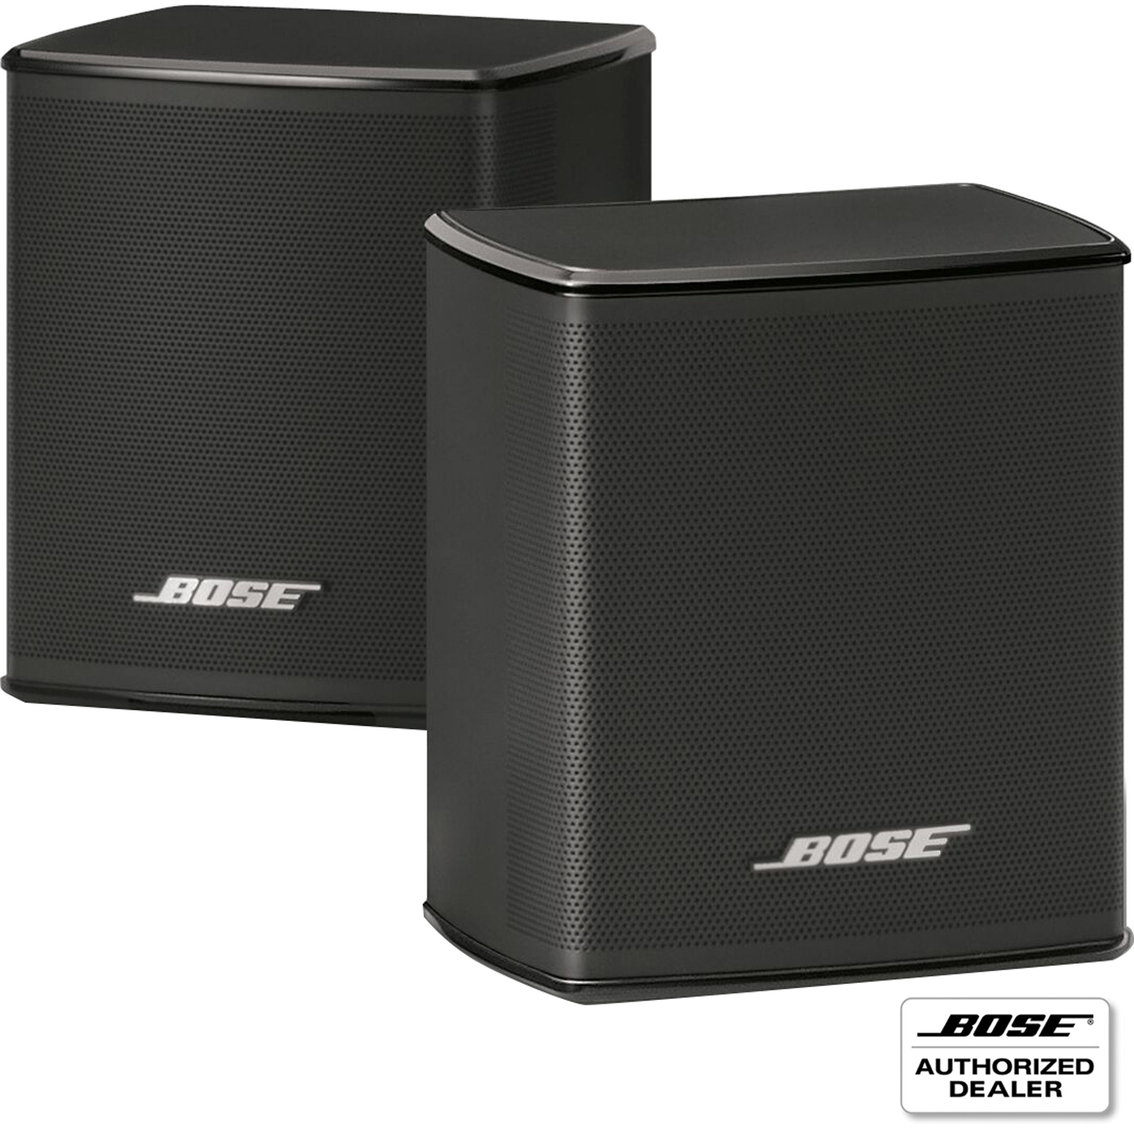 Bose Surround Speakers - Image 2 of 4